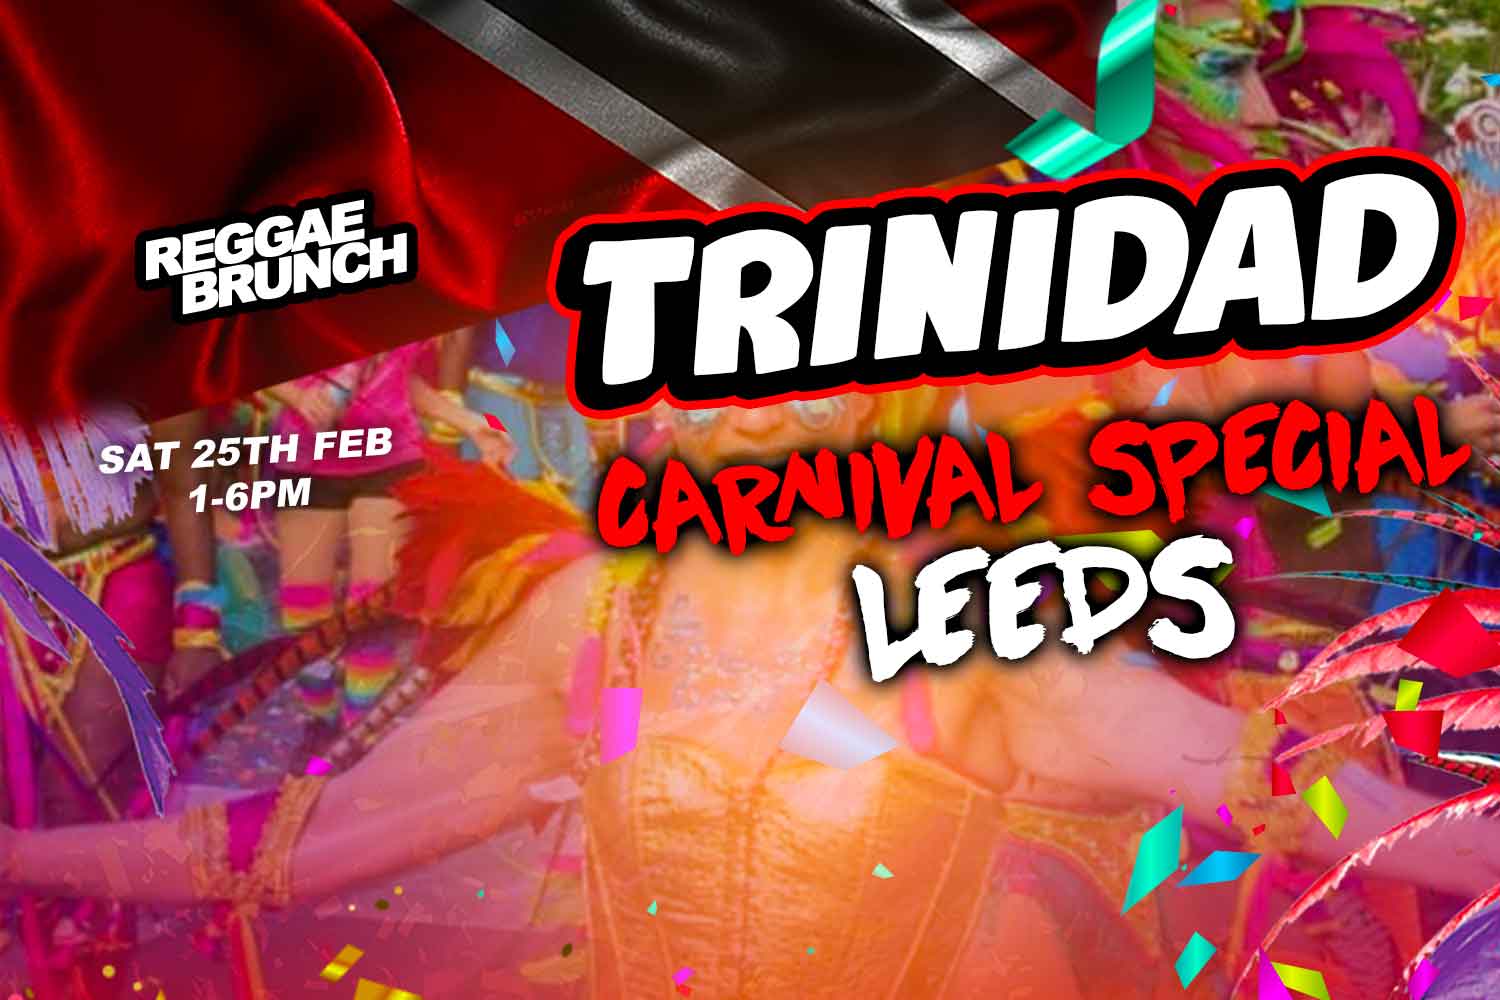 Sat, 25th Feb | Trinidad Carnival Special